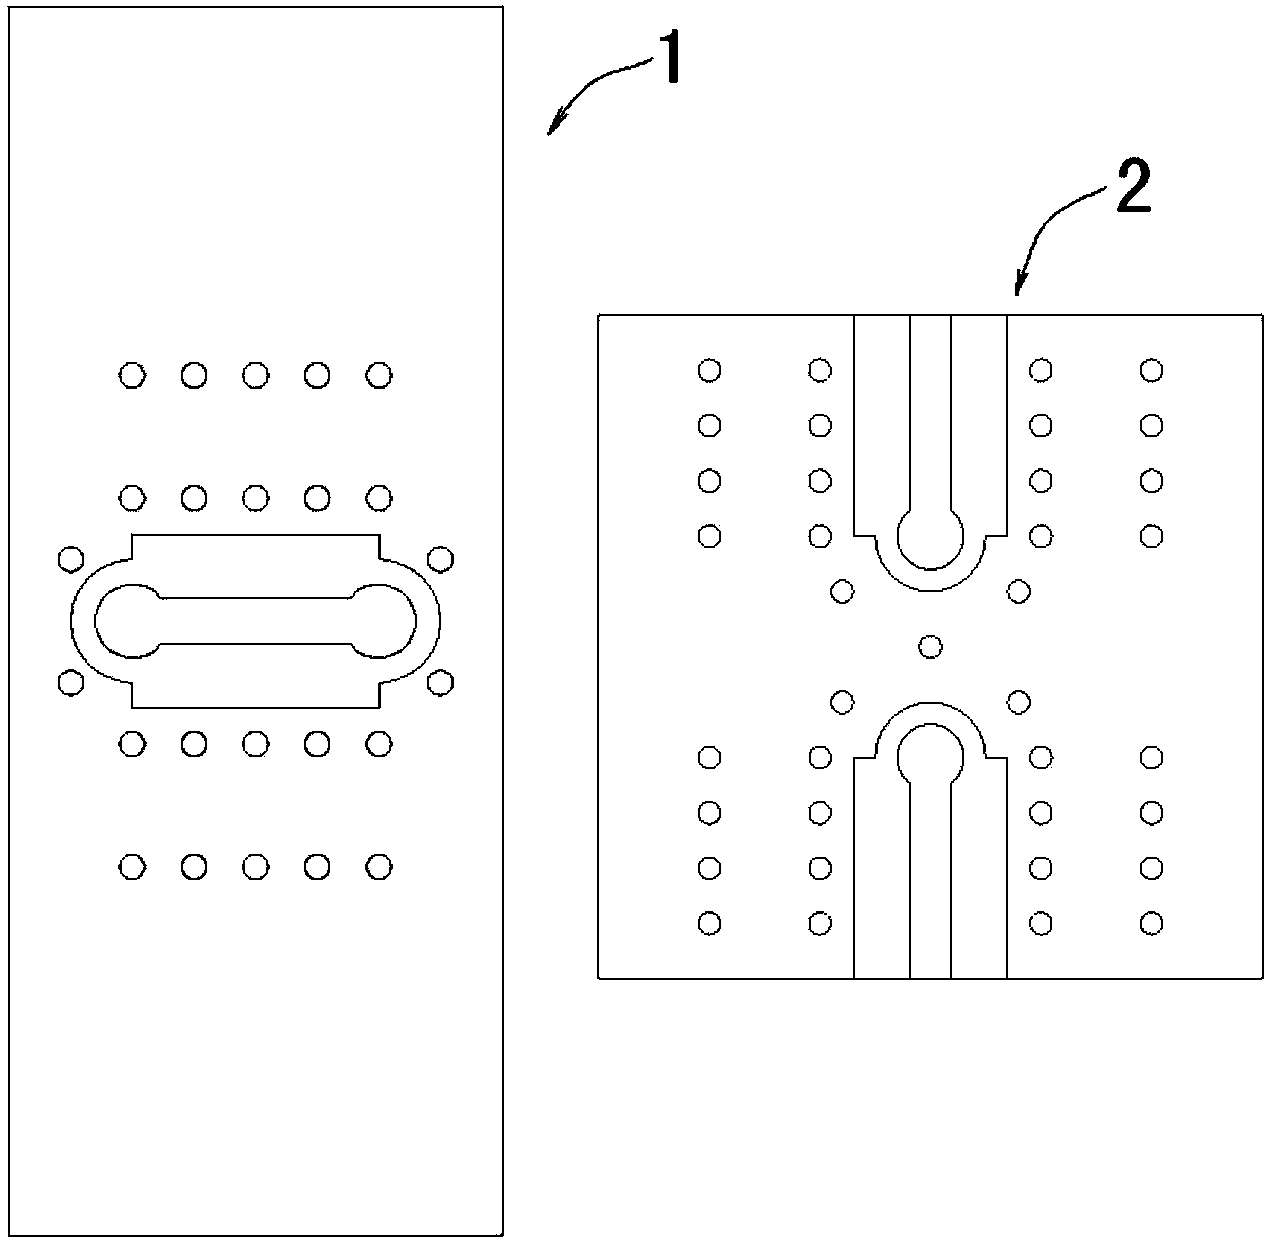 Lamination type three-dimensional LTCC perpendicular-interconnection microwave module